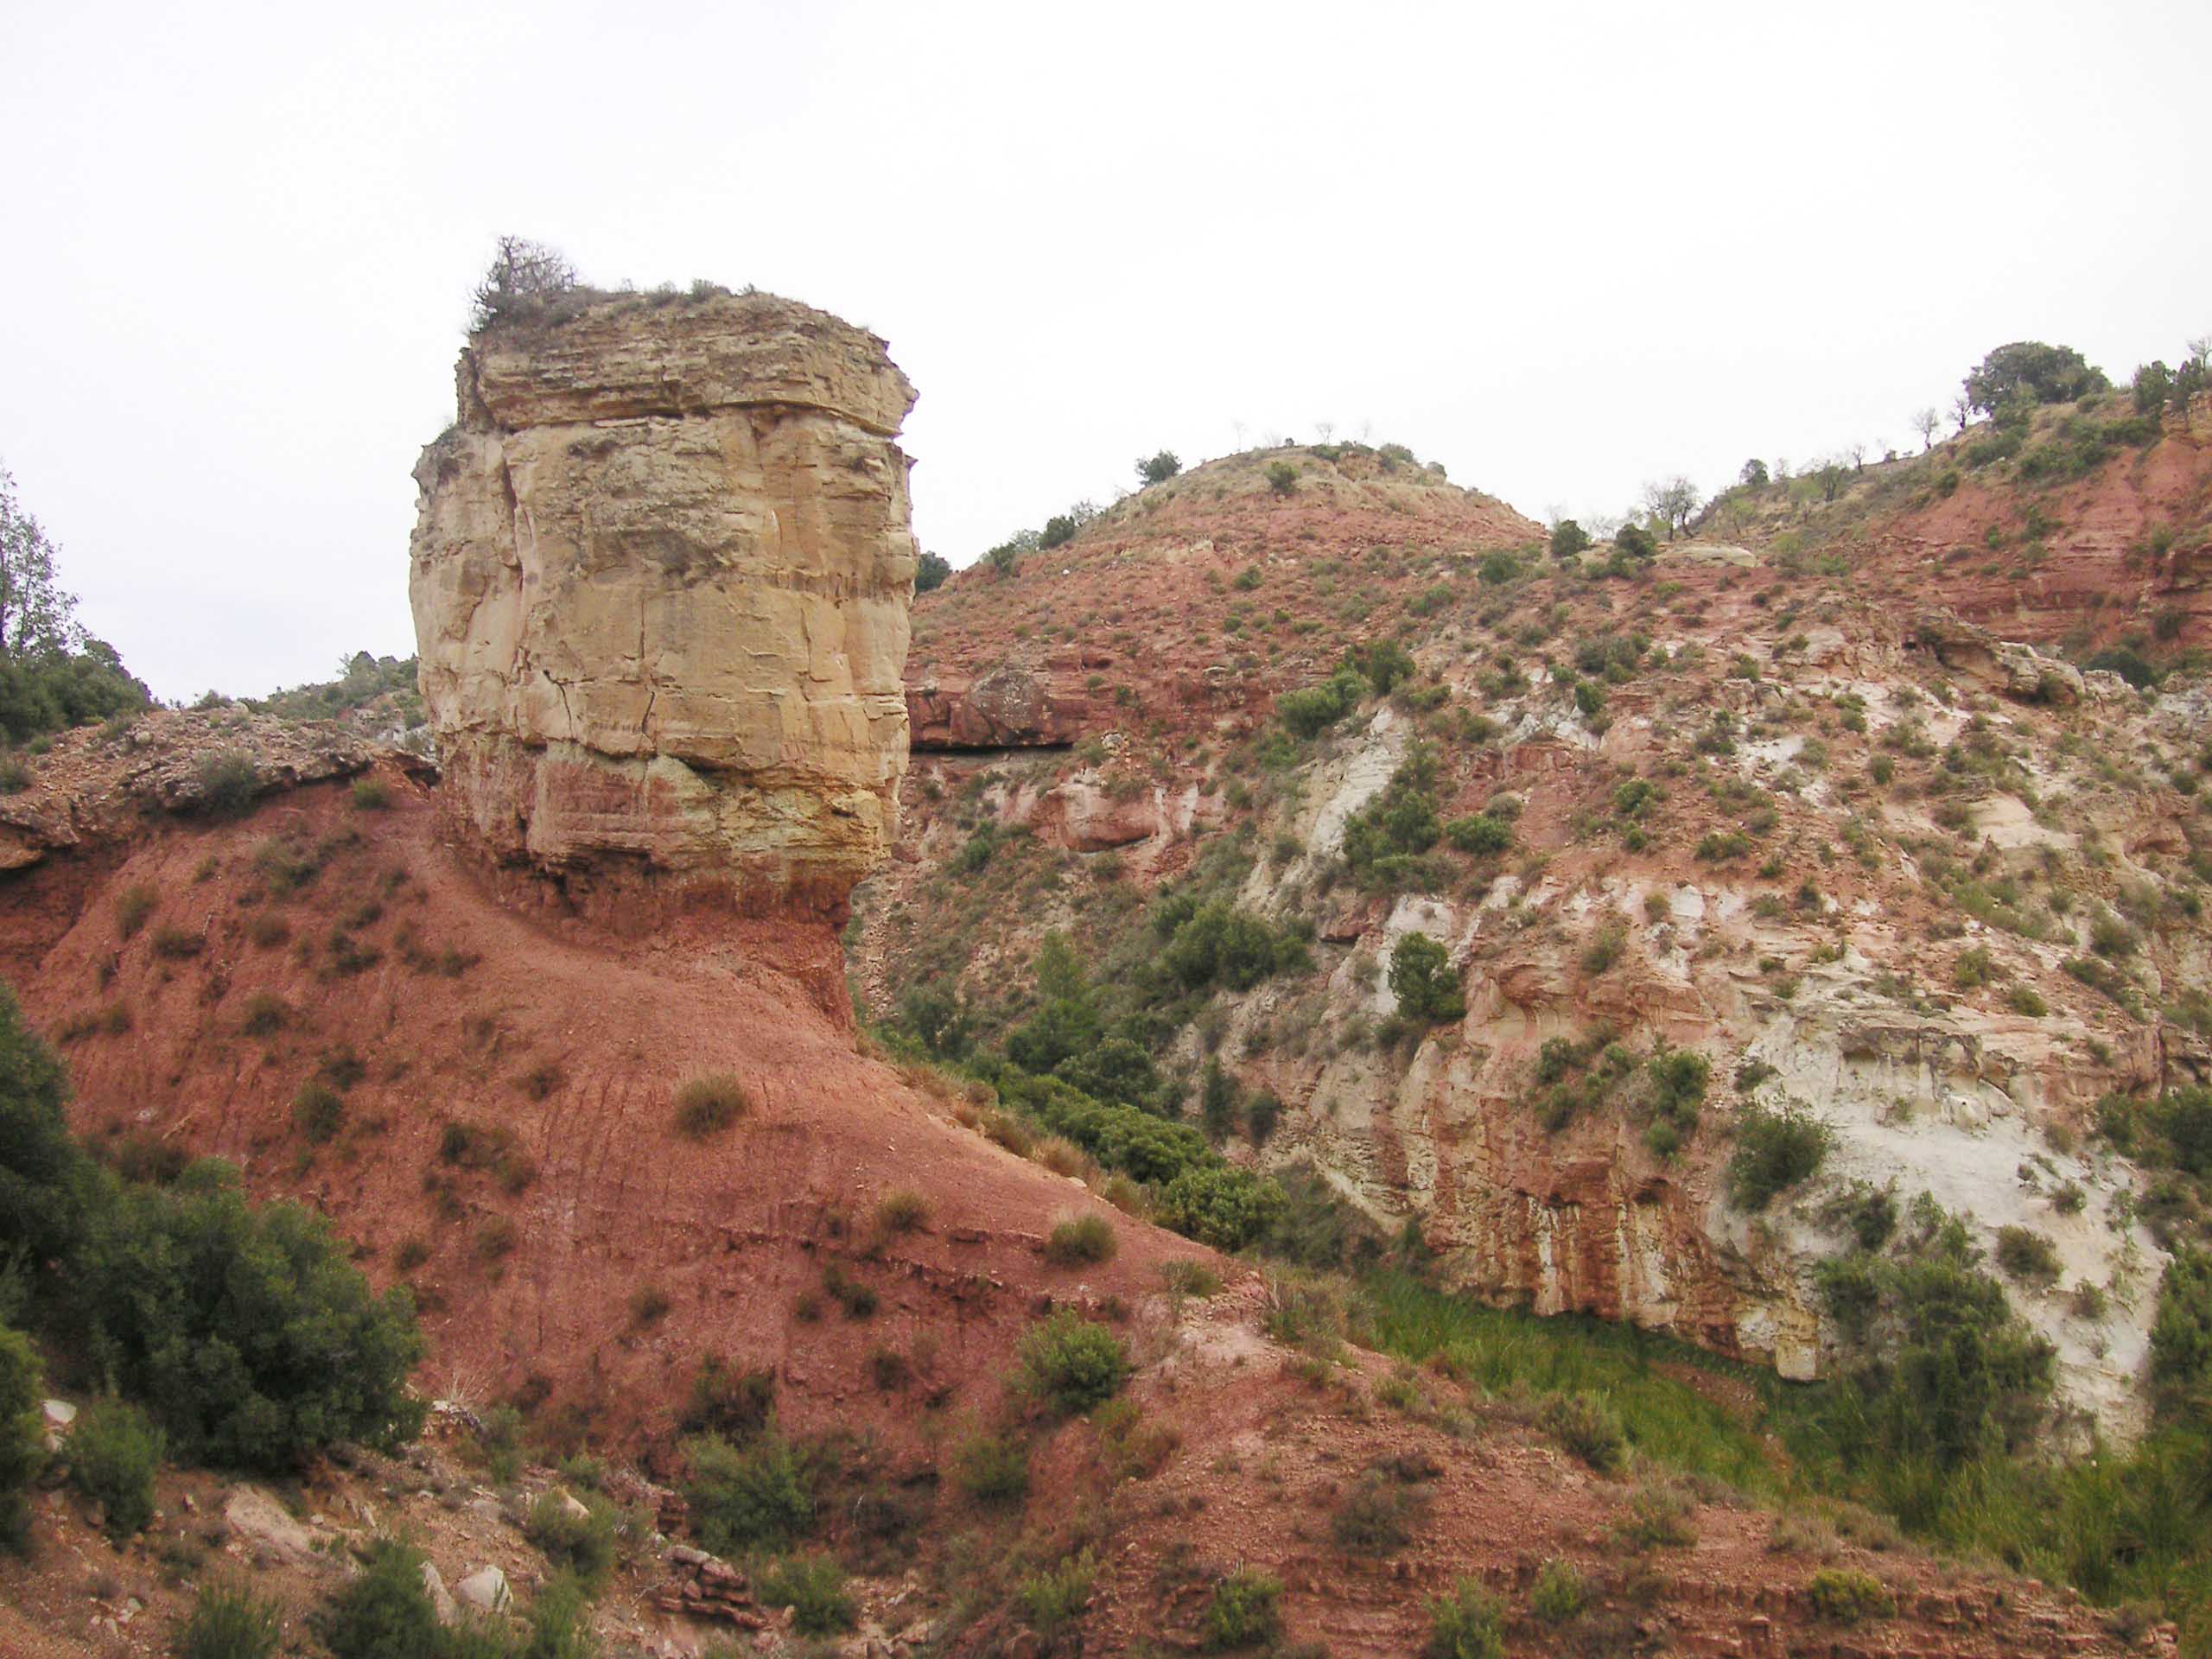 Jurassic outcrops with dinosaur fossils in Riodeva (Teruel).